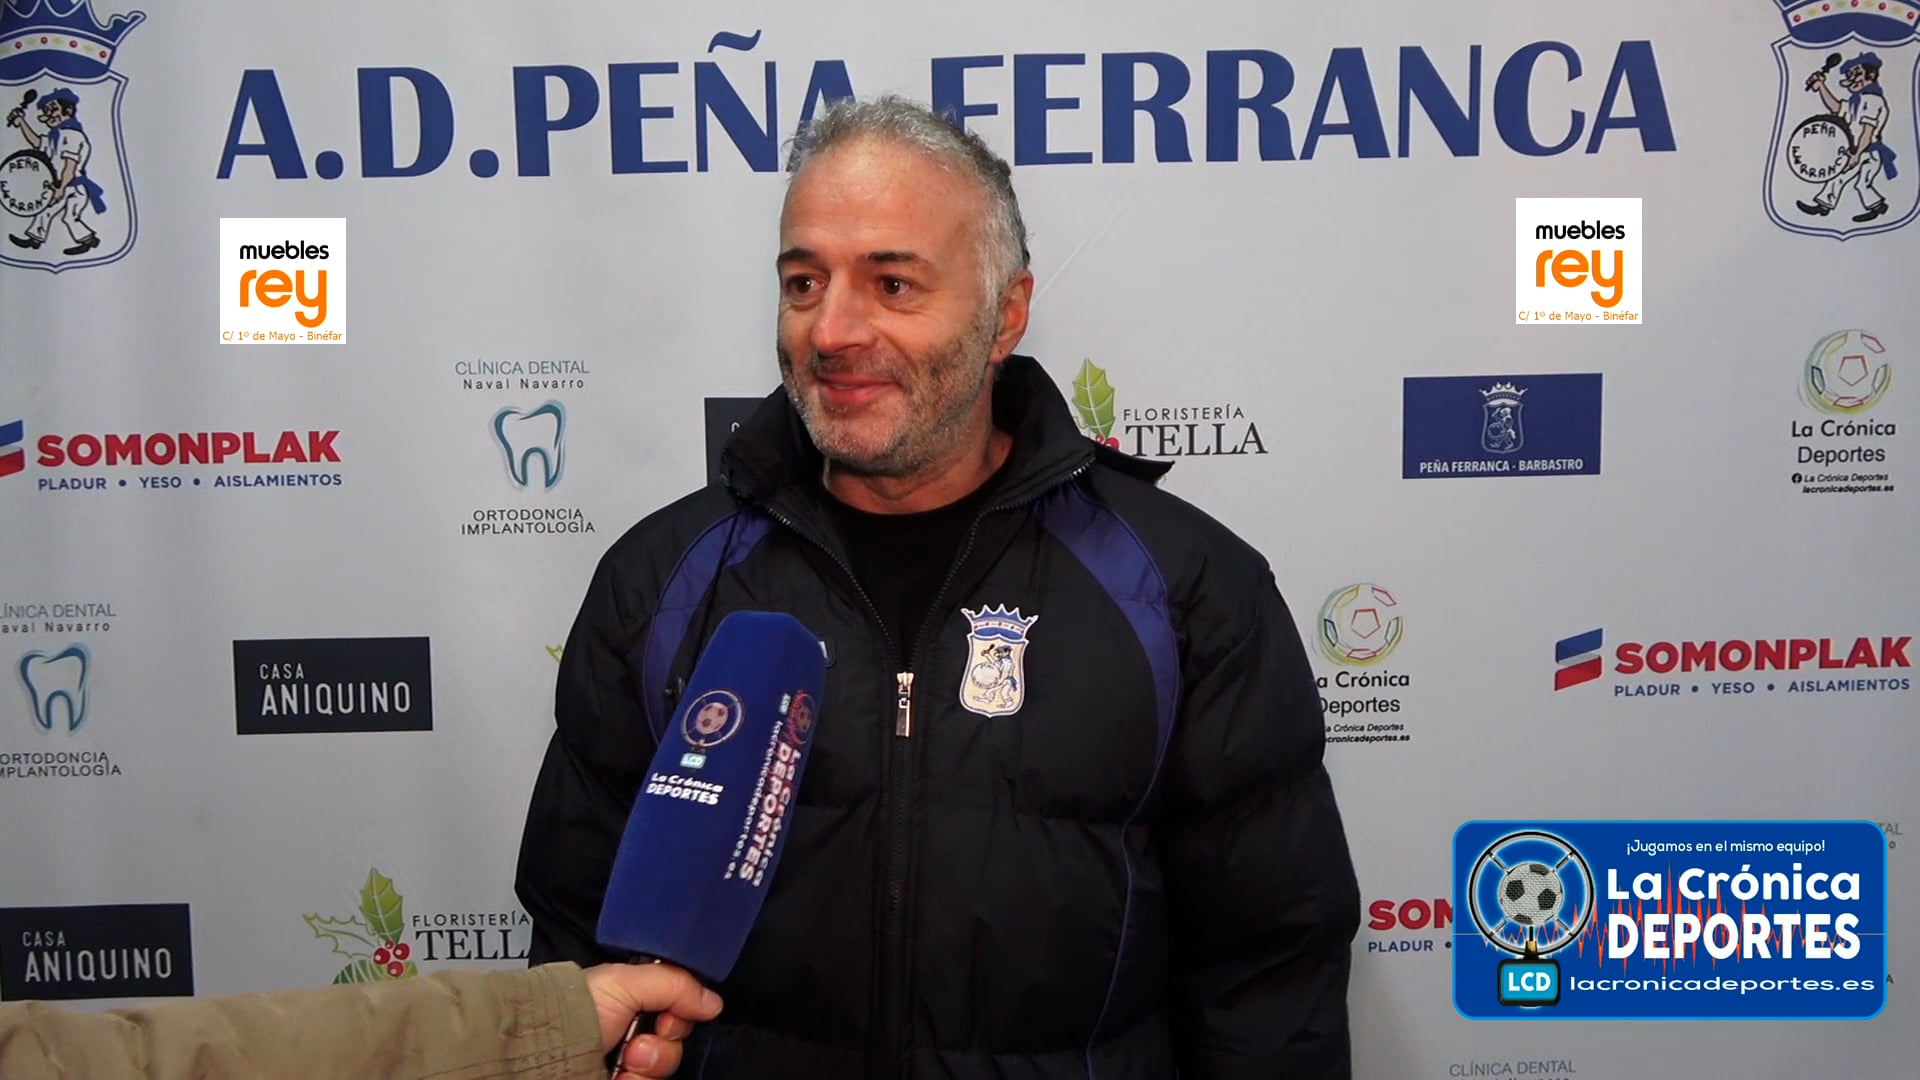 LA PREVIA / Internacional Huesca - Peña Ferranca Tella / ALBERT MARTÍNEZ (Entrenador Ferranca) Jornada 20 / Preferente - Gr 1